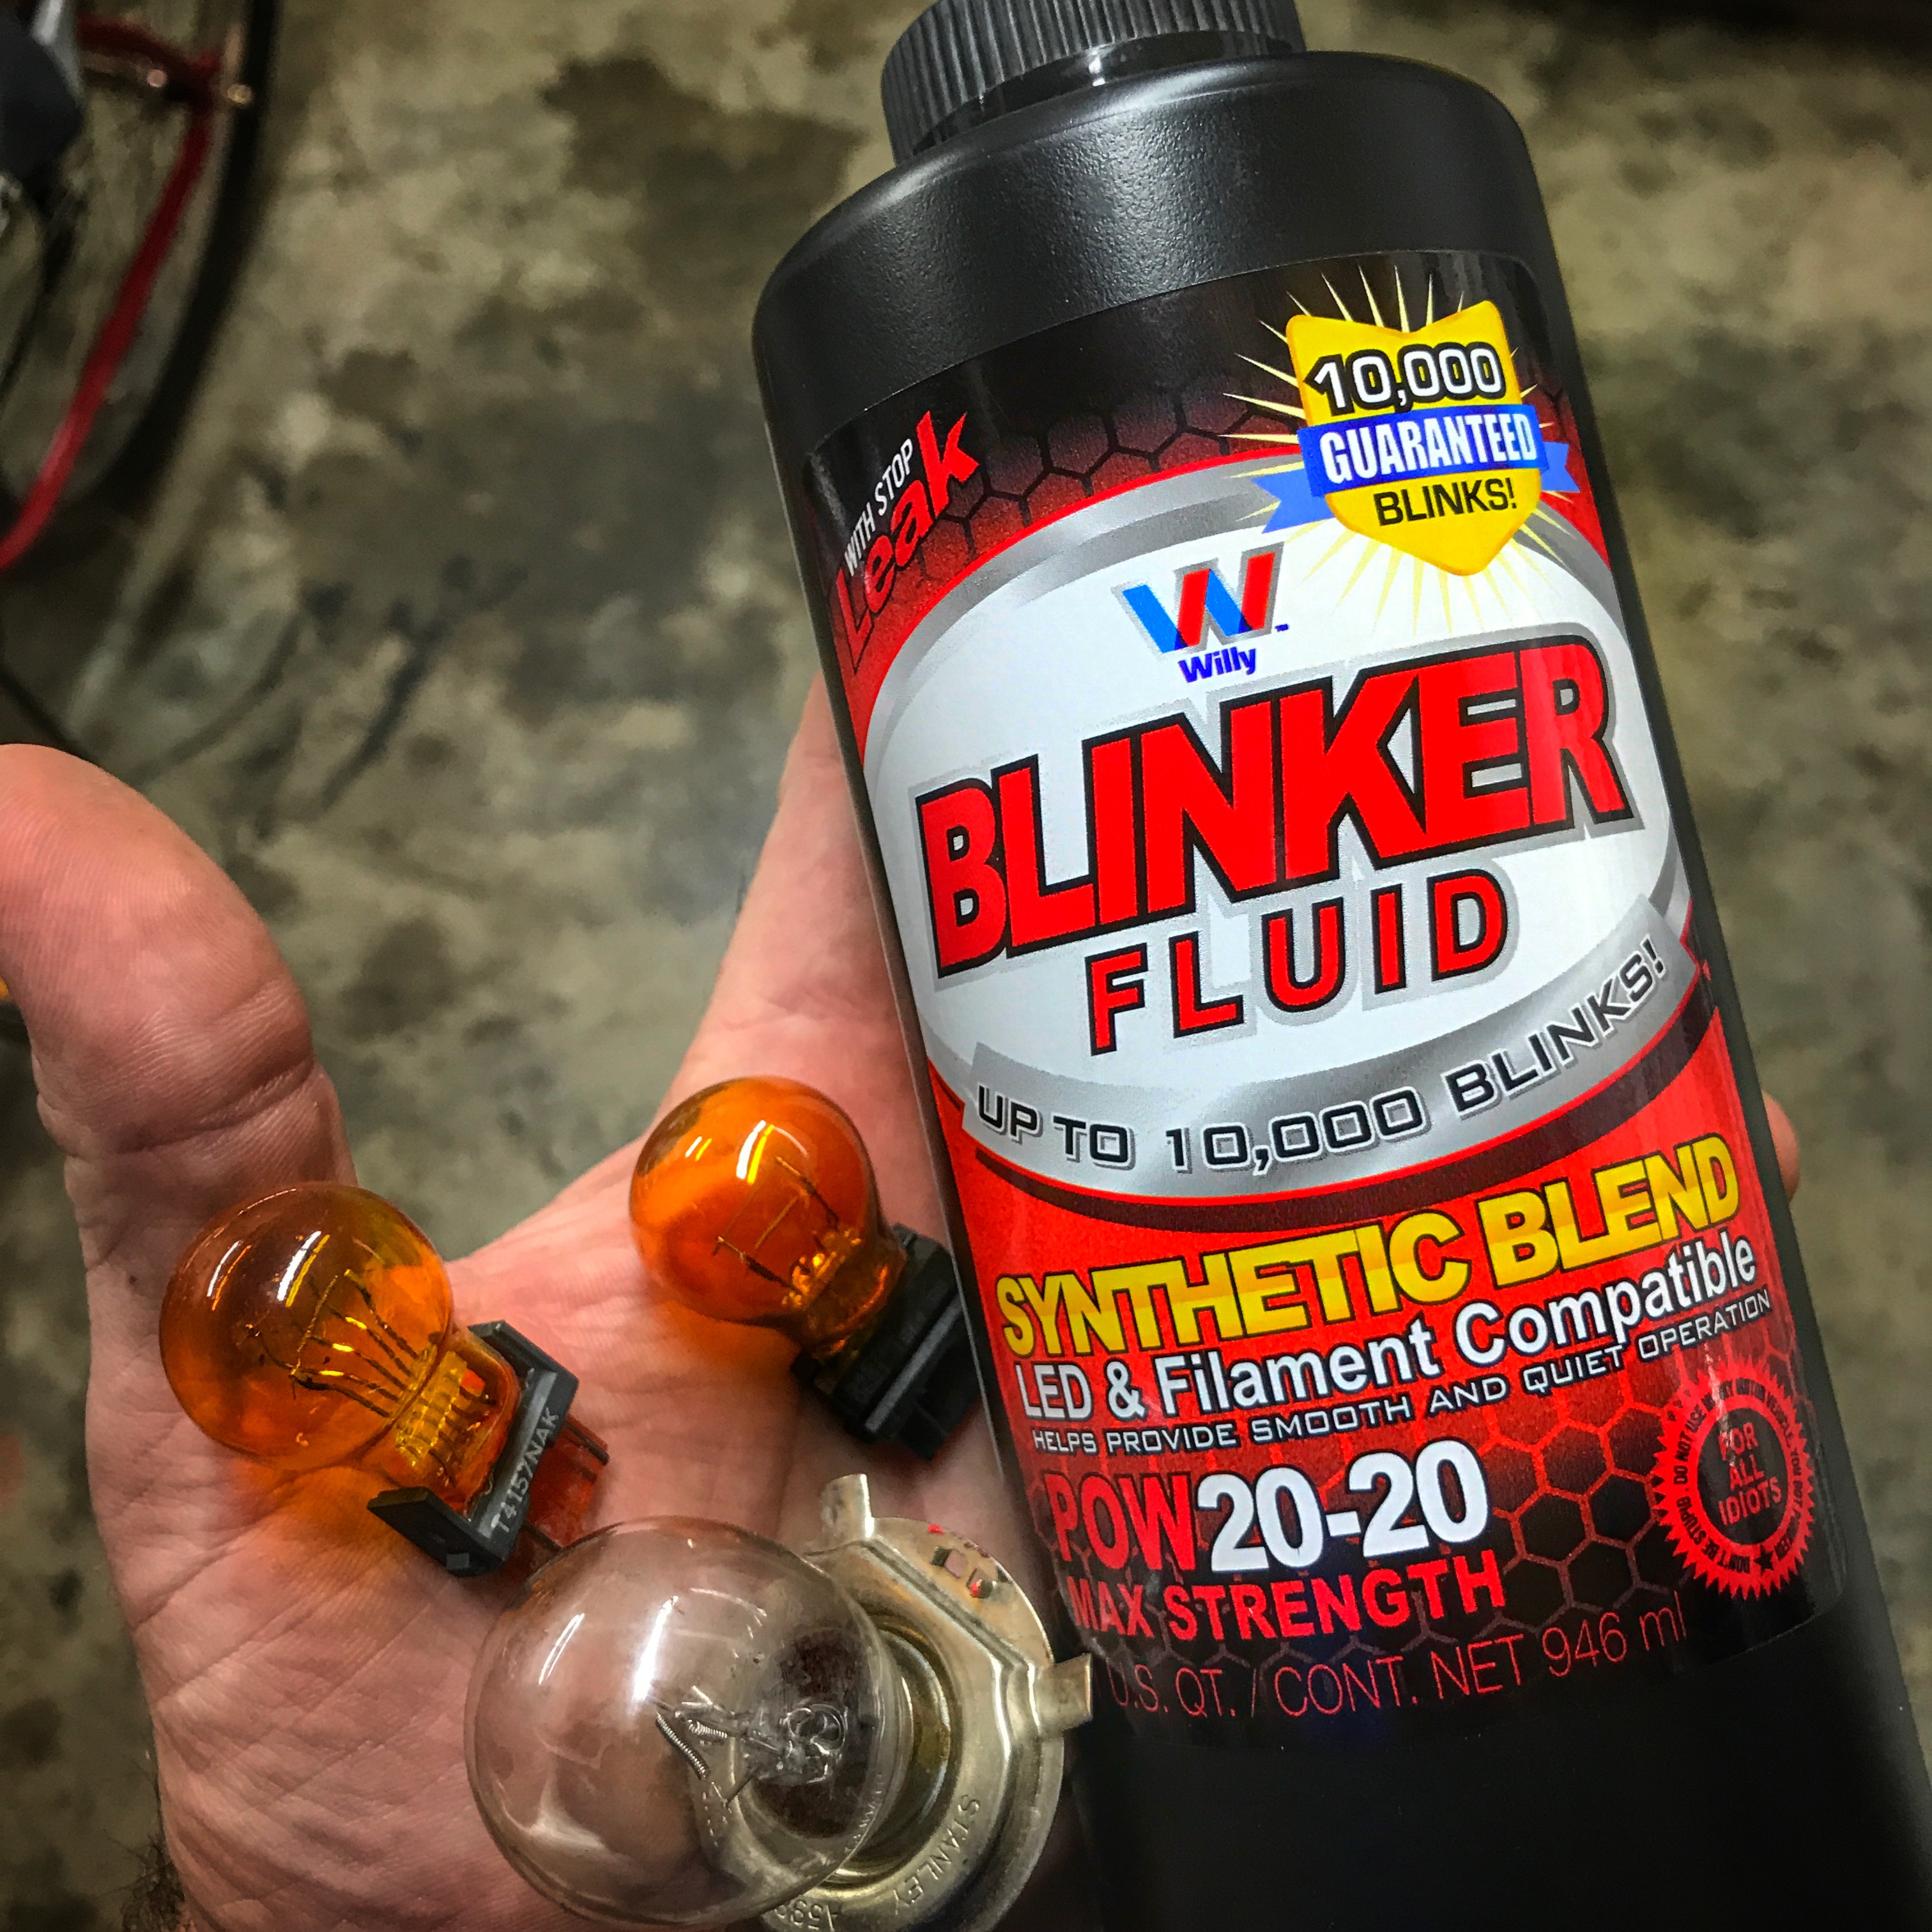 blinker-fluid-sticker-with-3-bulbs.jpg